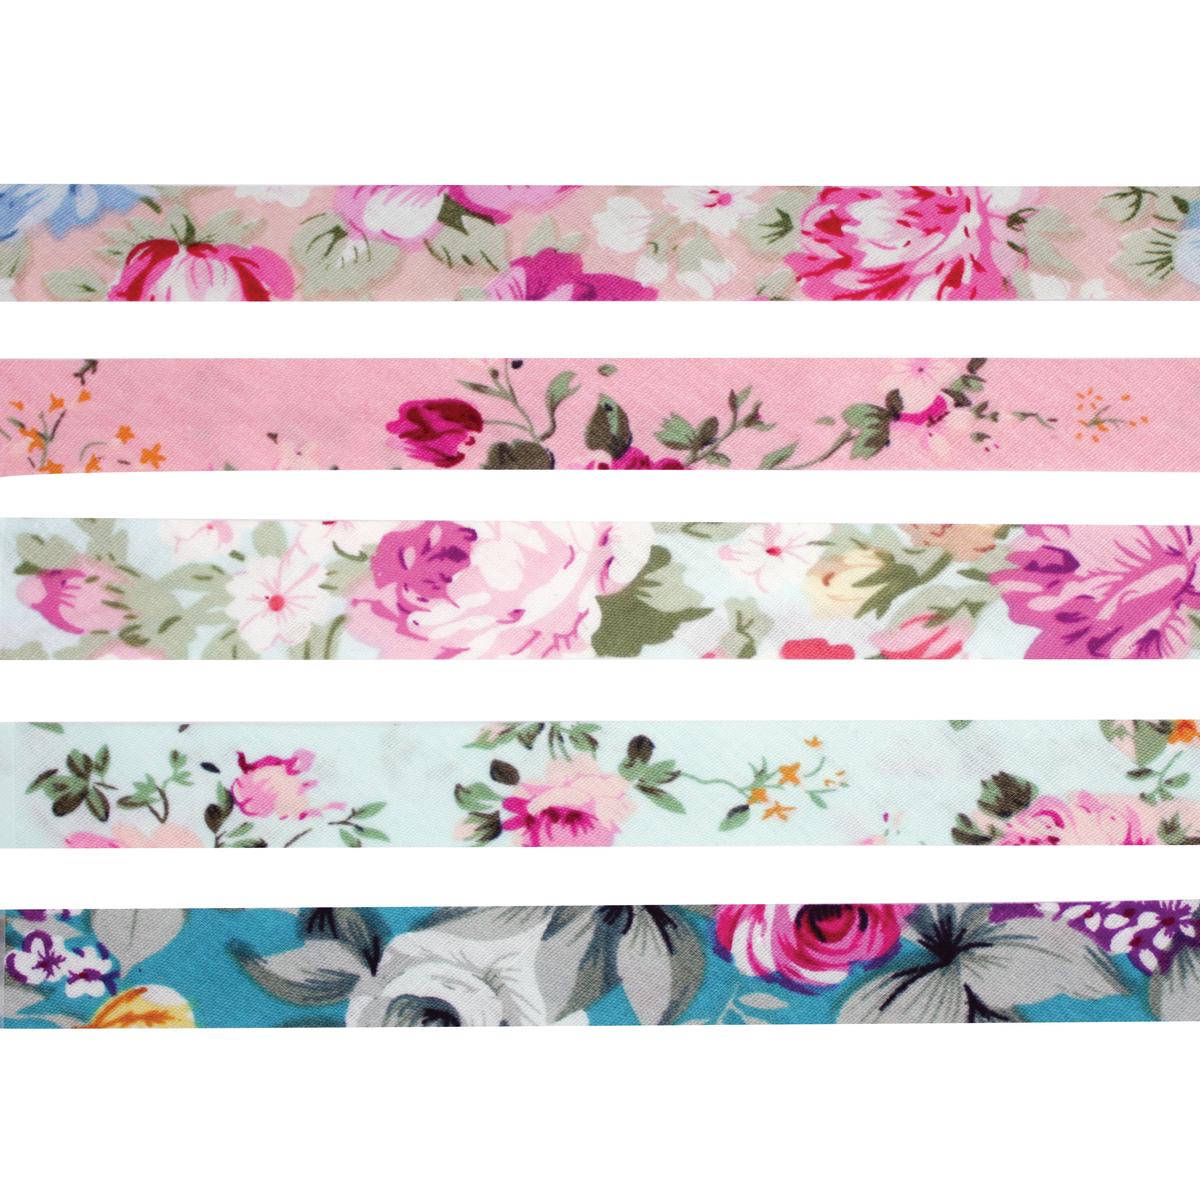 Biais coton motif fleurs pastel 1 cm x 1 m x 5 pcs